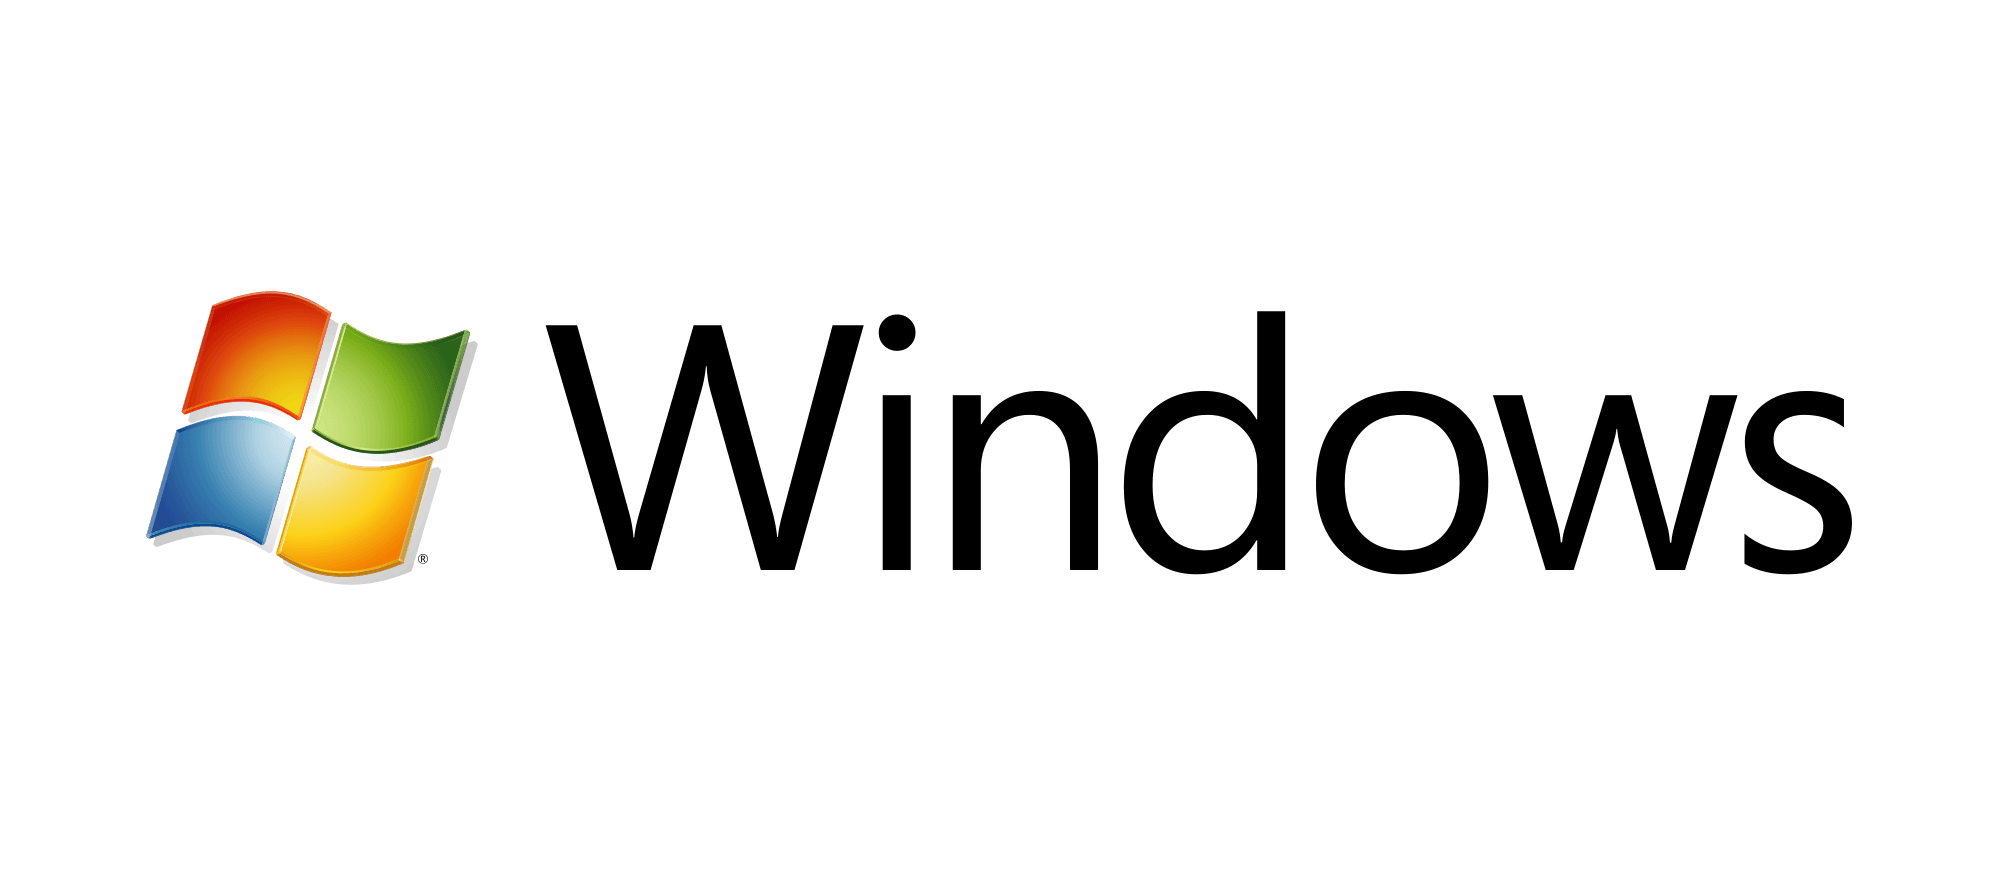 Microsoft Windows Logo - Windows logo